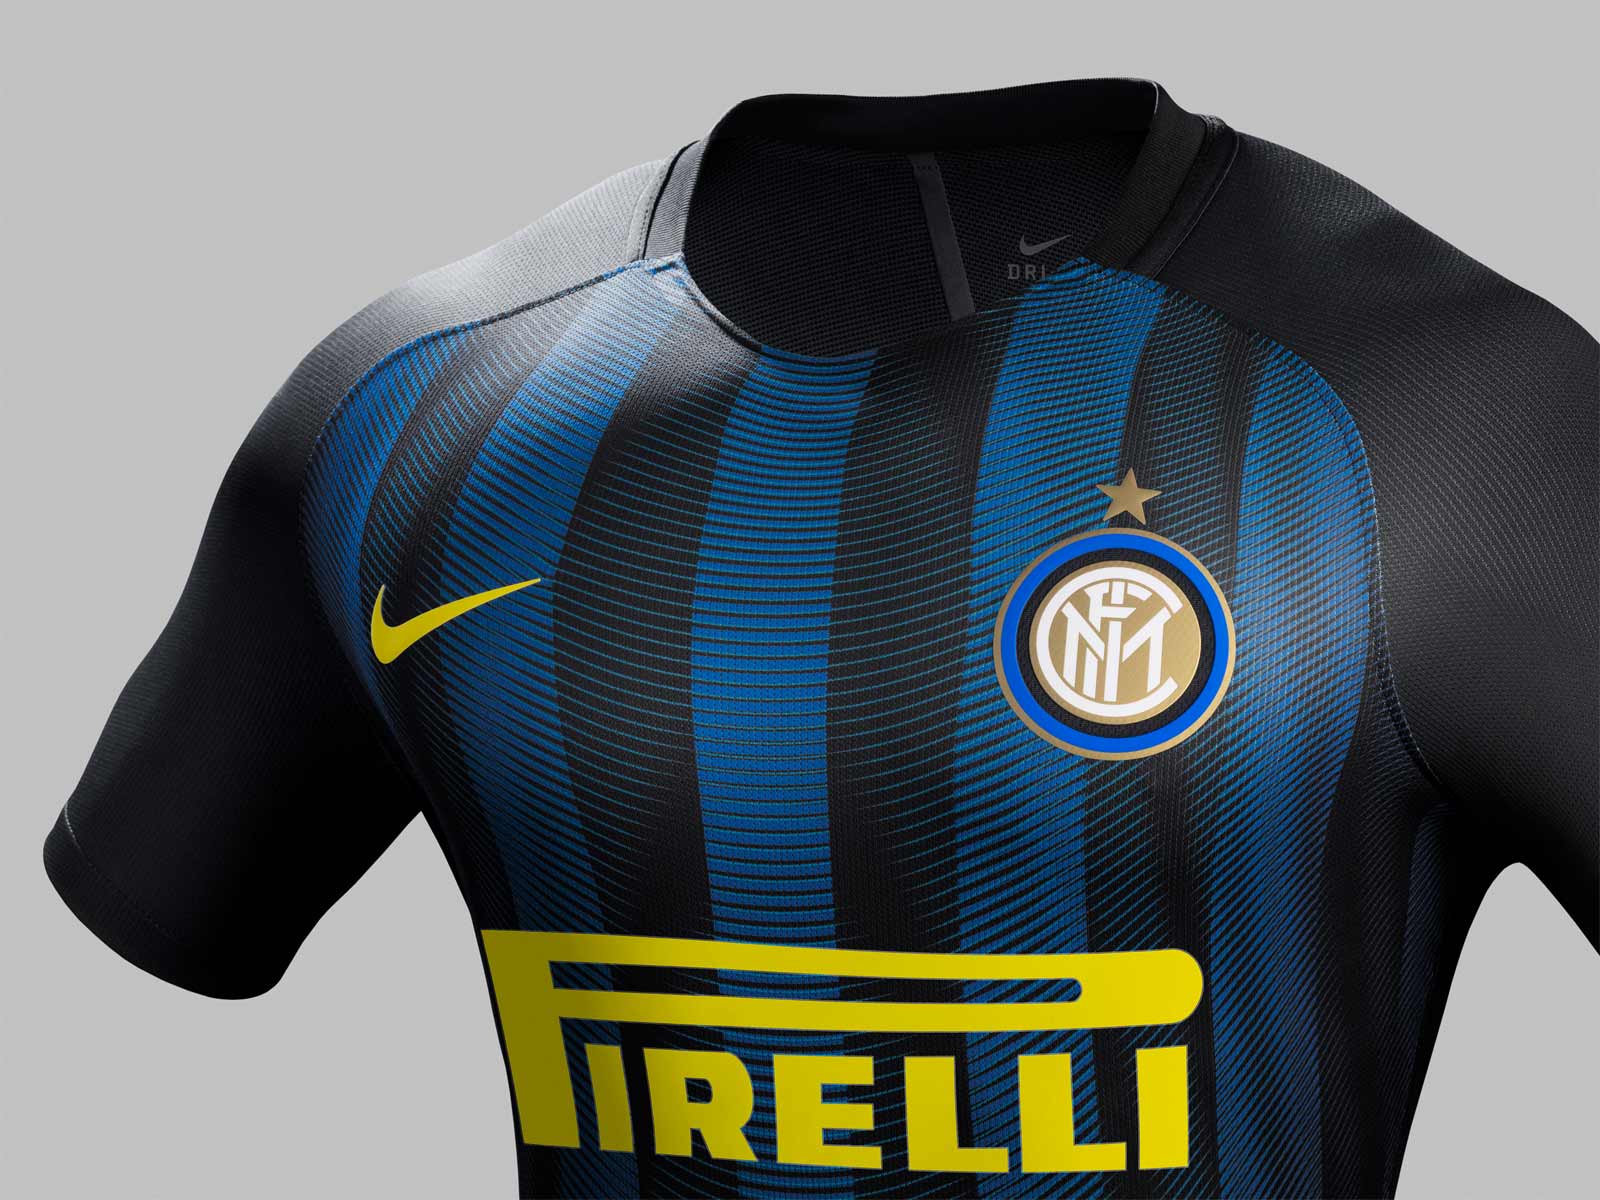 Inter Milan 16 17 Home Kit Released